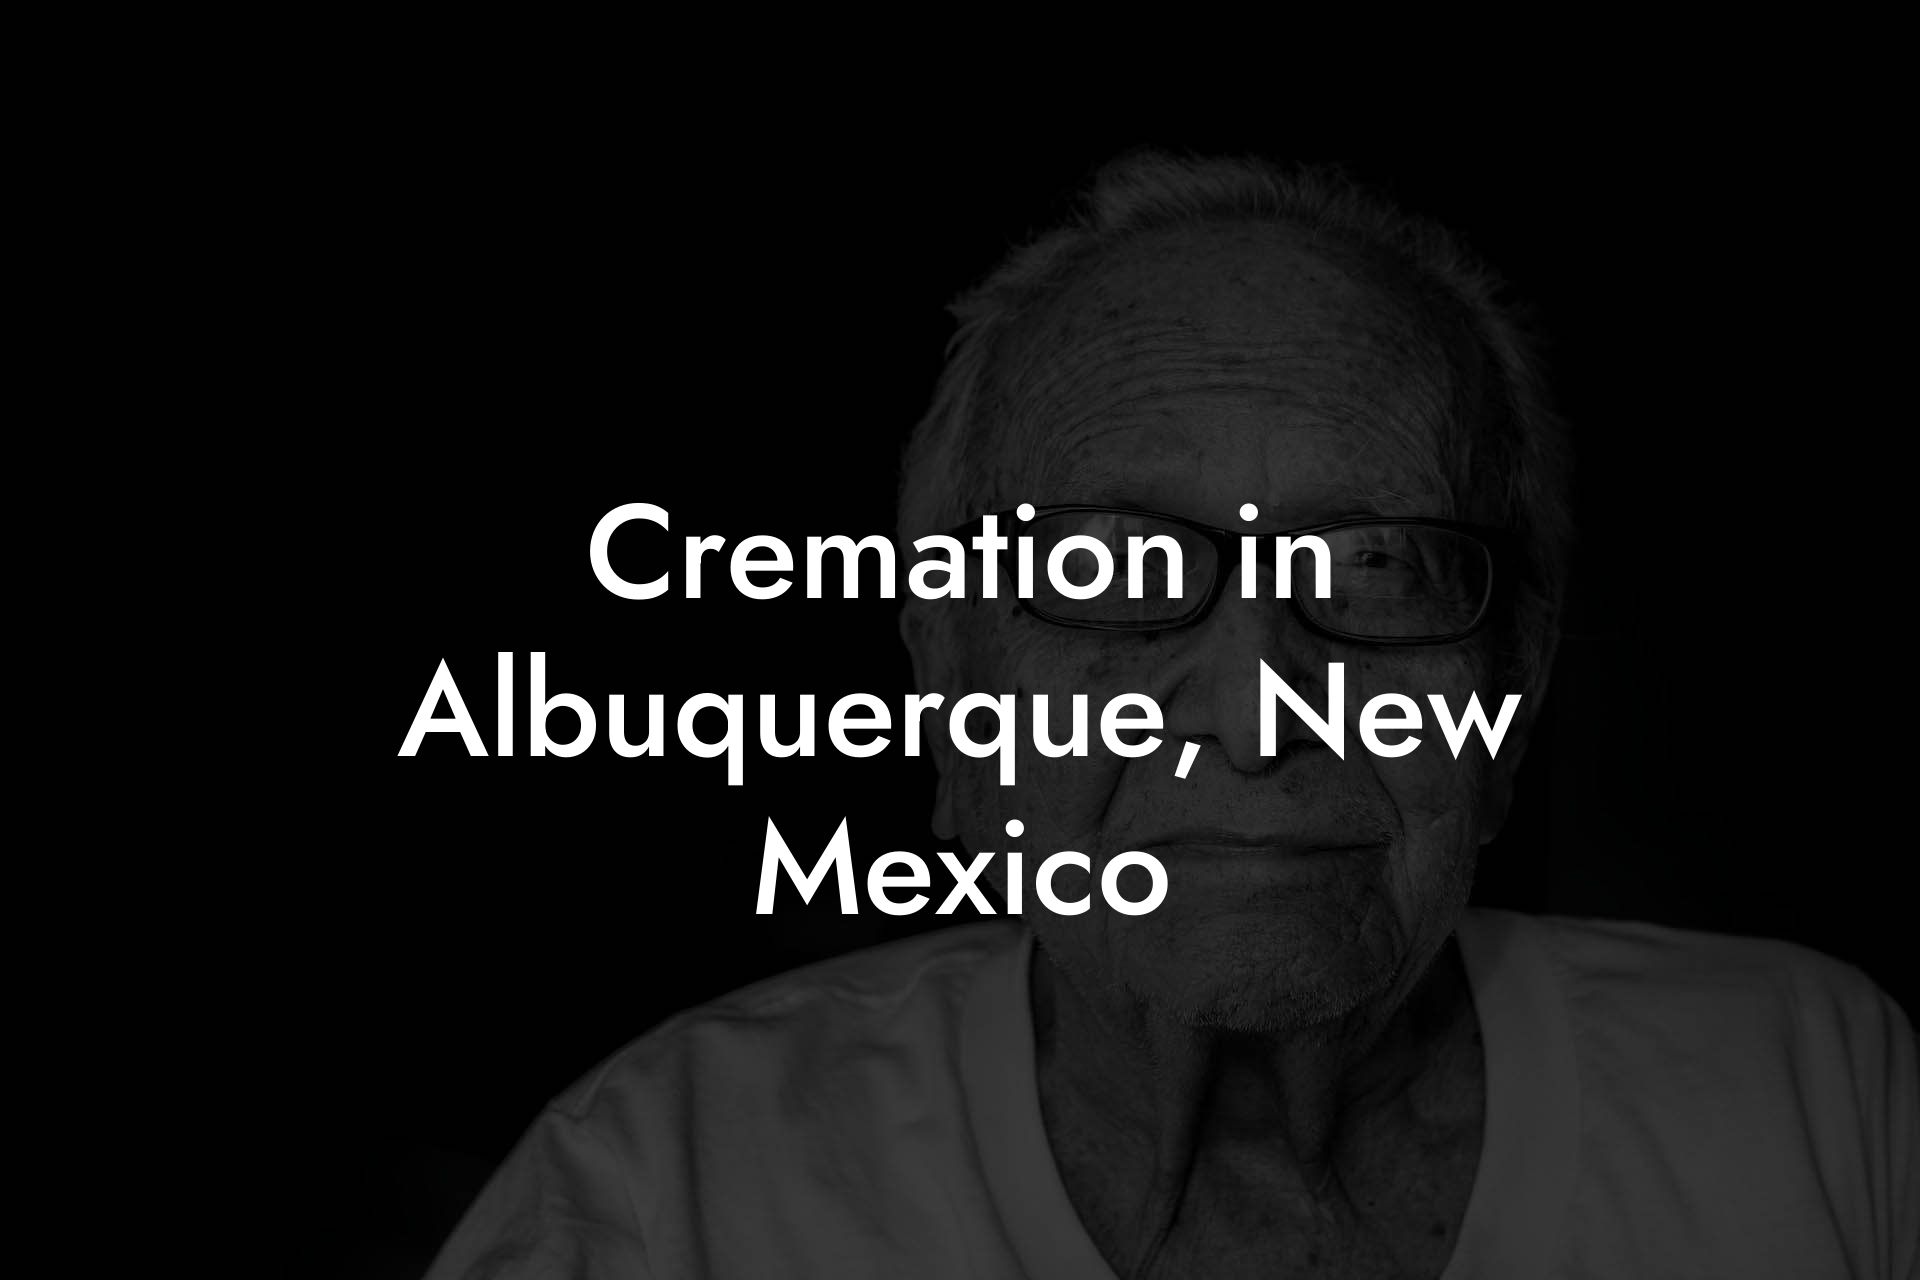 Cremation in Albuquerque, New Mexico